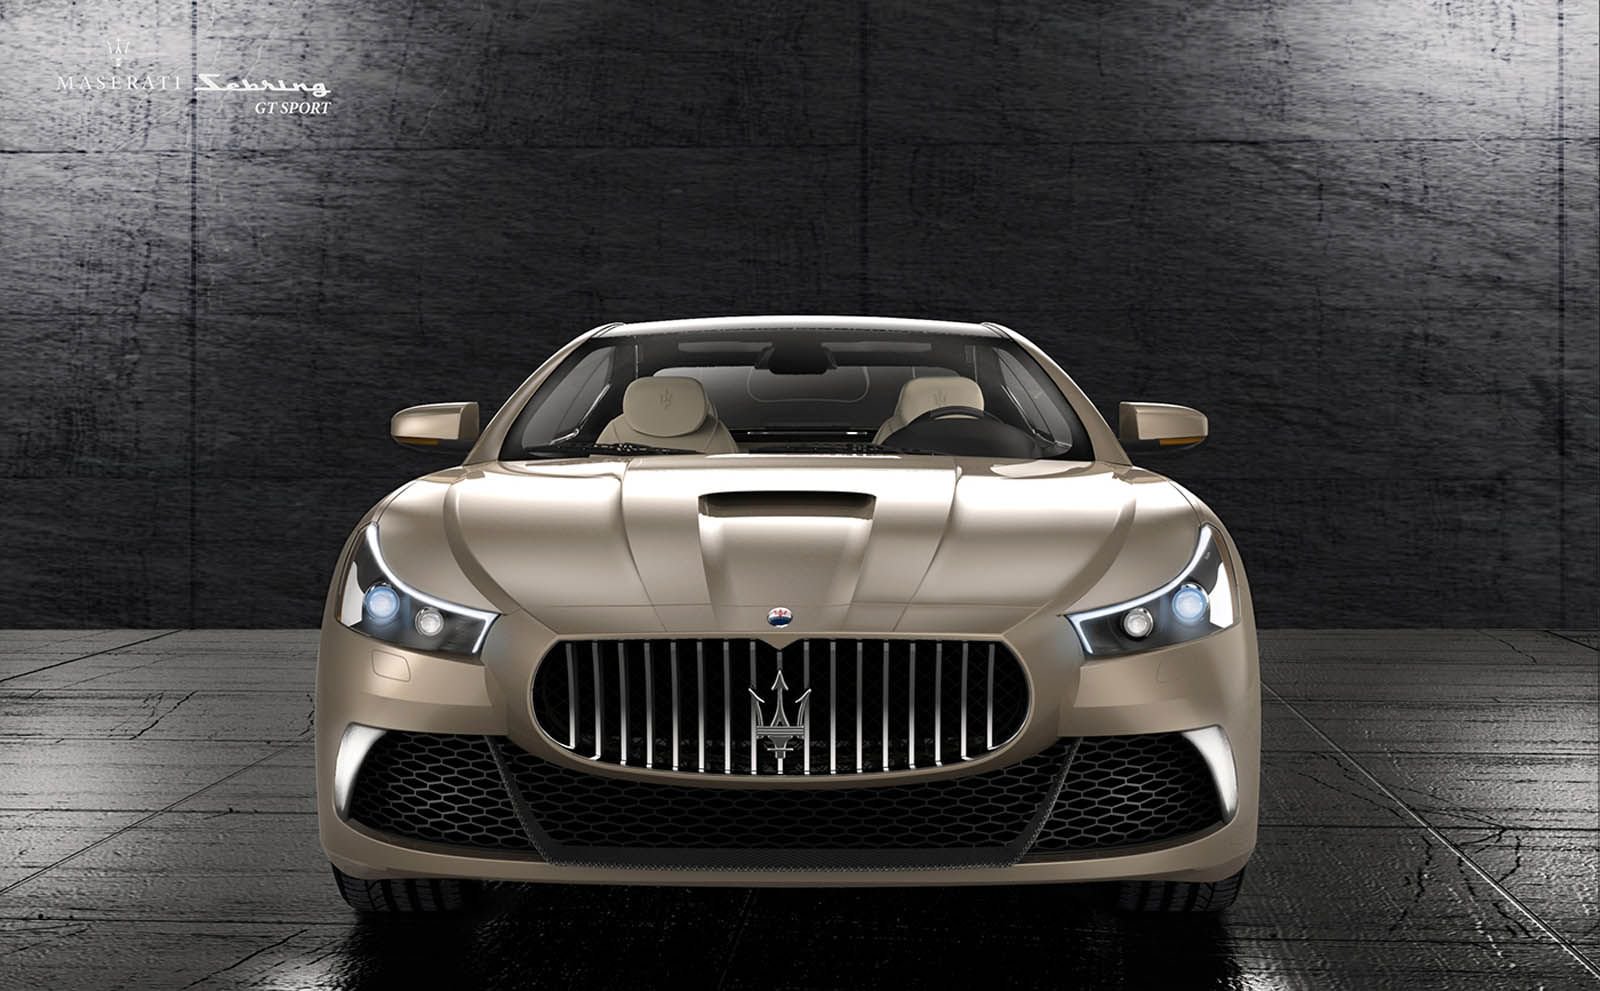 Maserati Sebring: The Epitome of Style and Sophistication